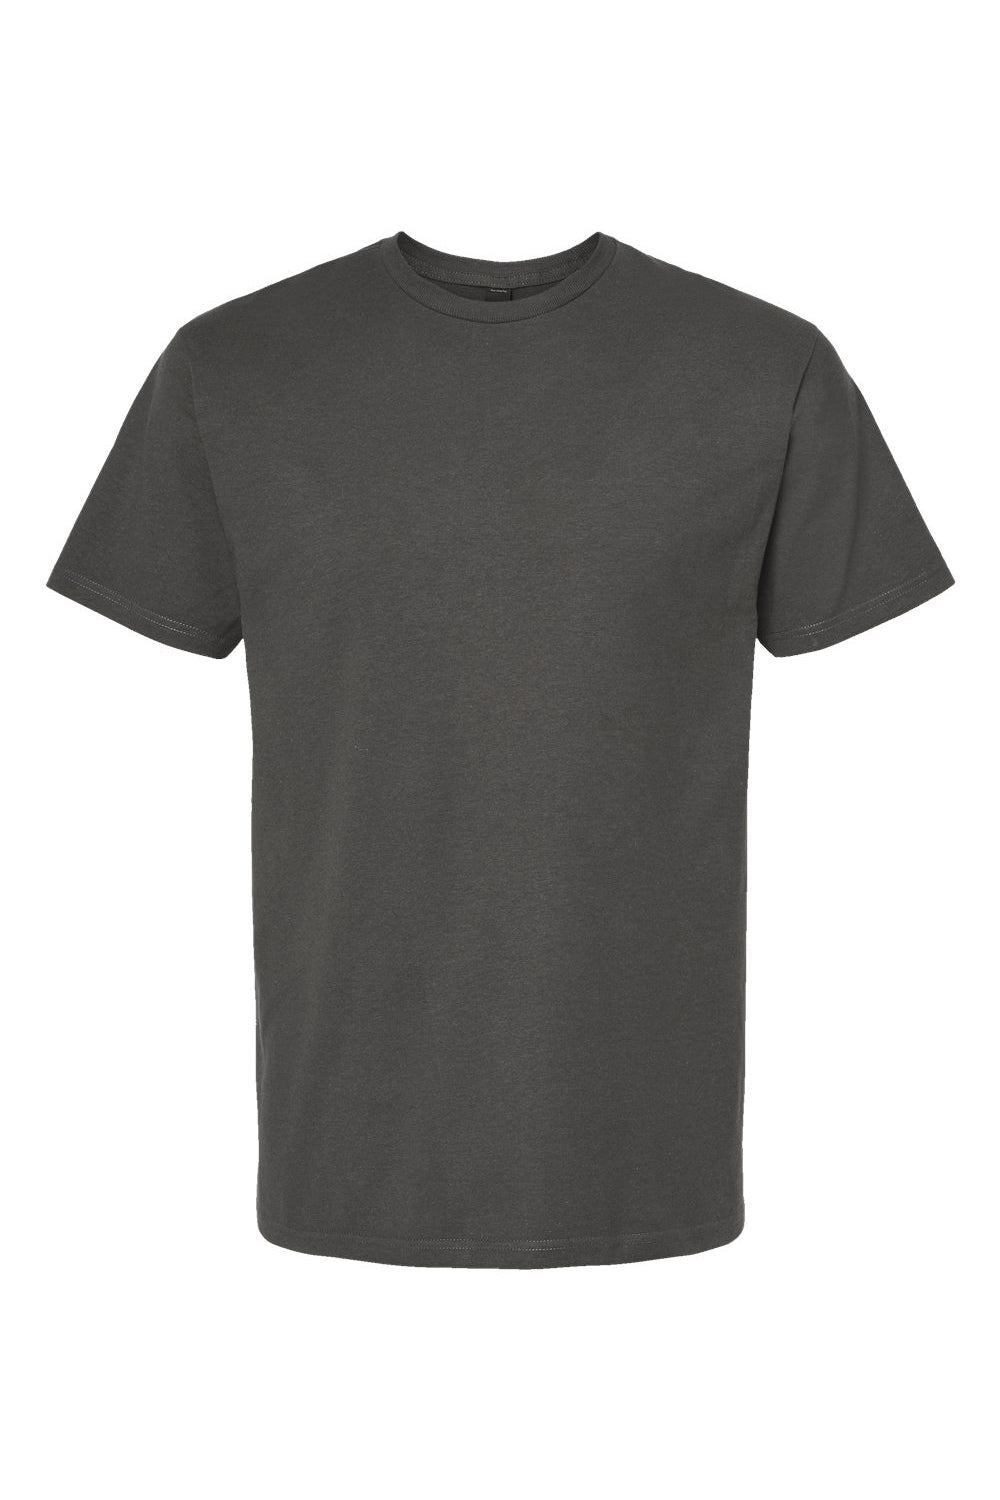 Tultex 290 Mens Jersey Short Sleeve Crewneck T-Shirt Charcoal Grey Flat Front